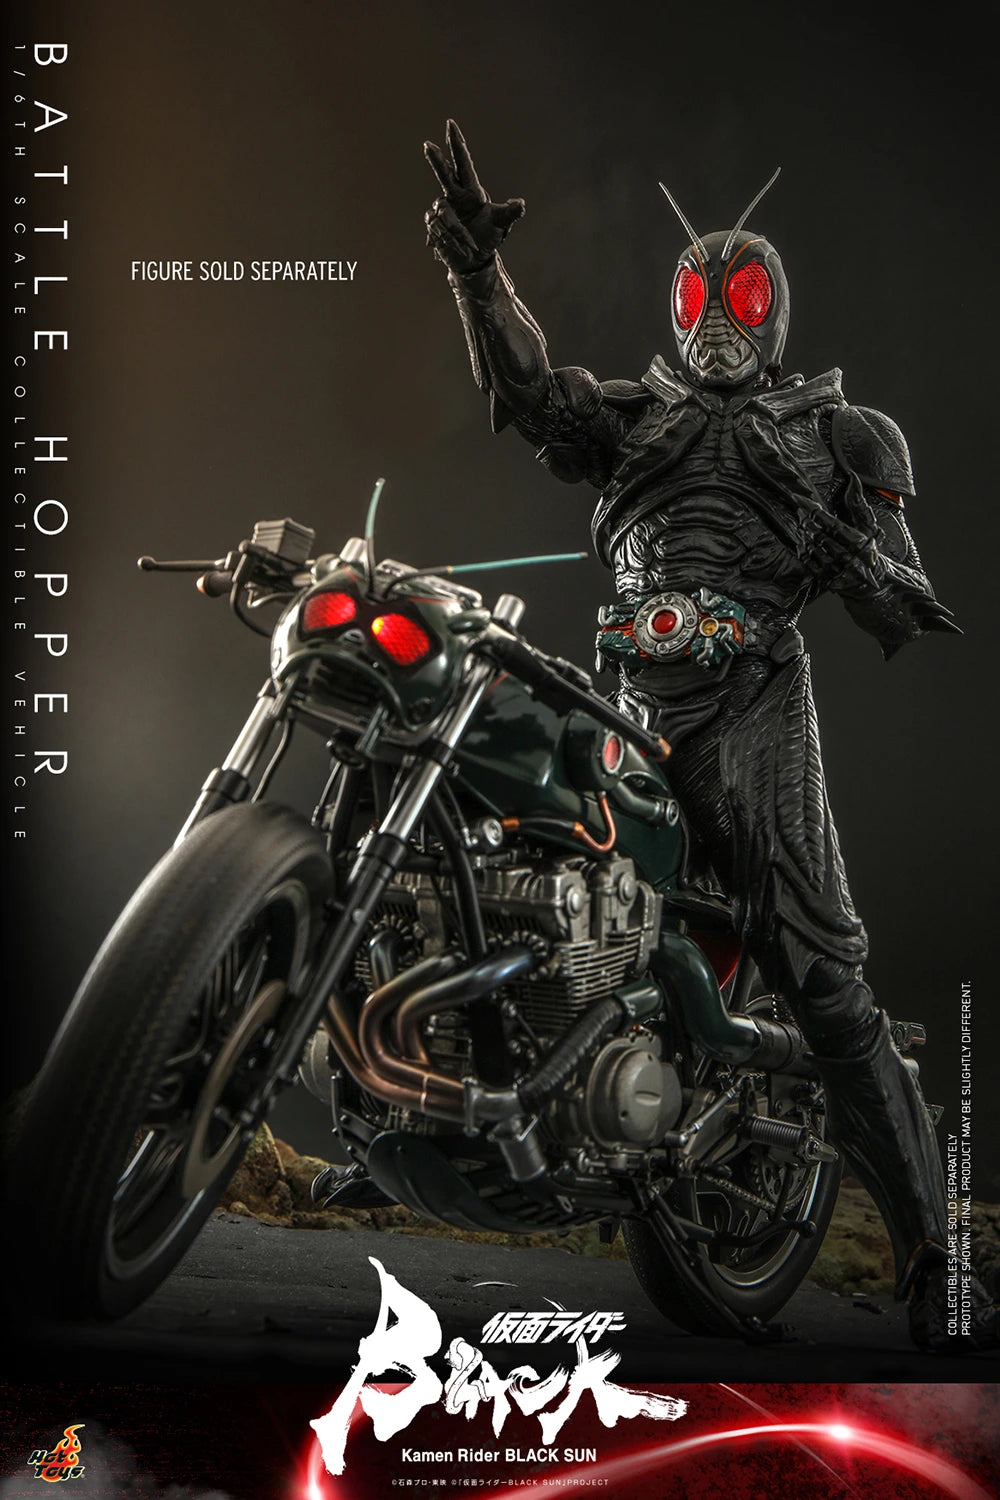 Hot Toys Kamen Rider Black Sun Battle Hopper 1/6th Scale Figure